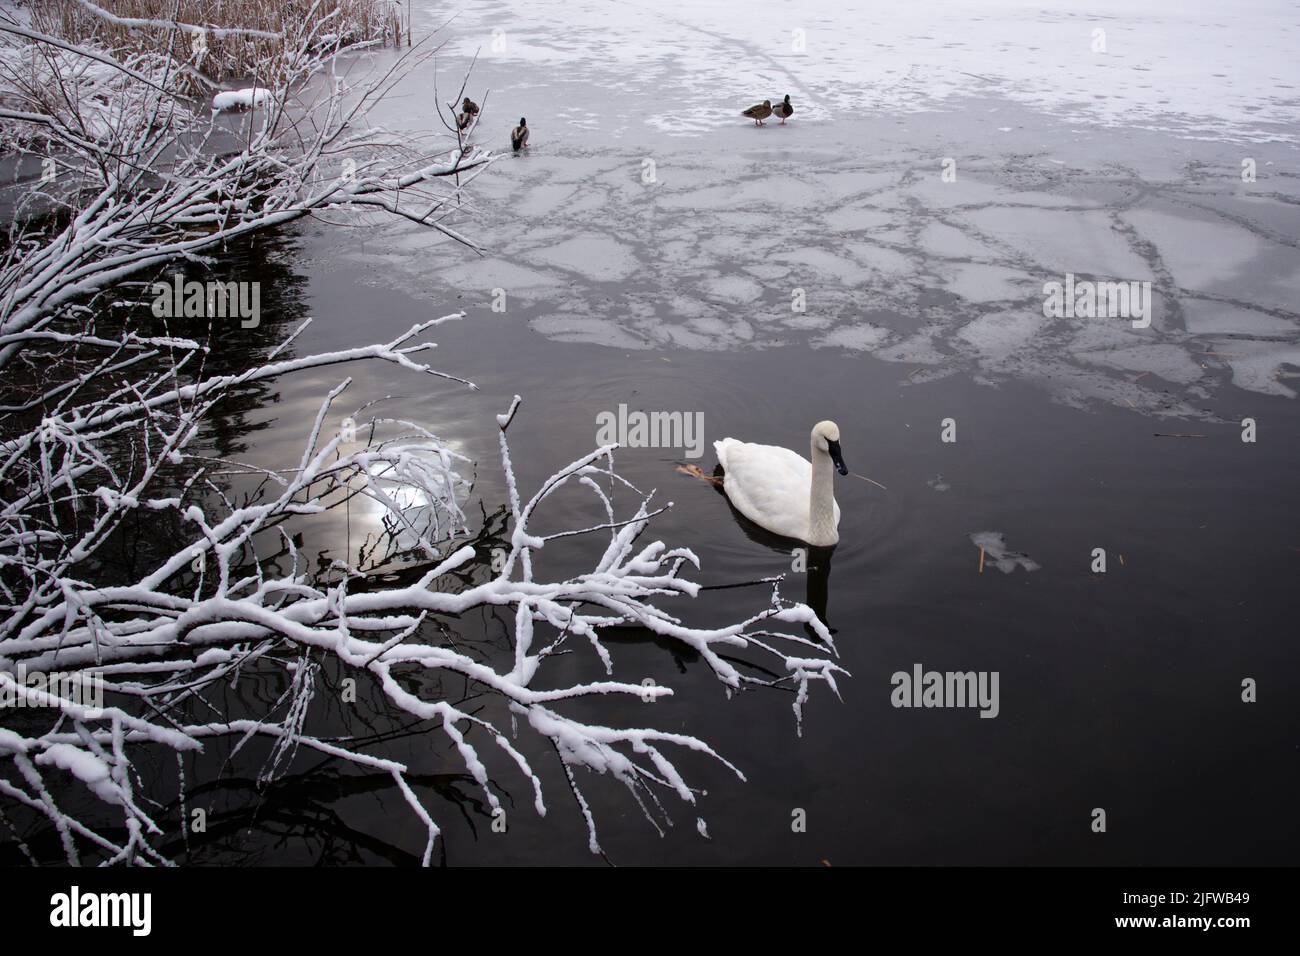 Winter scenery of swan swimming in the frozen lake Stock Photo